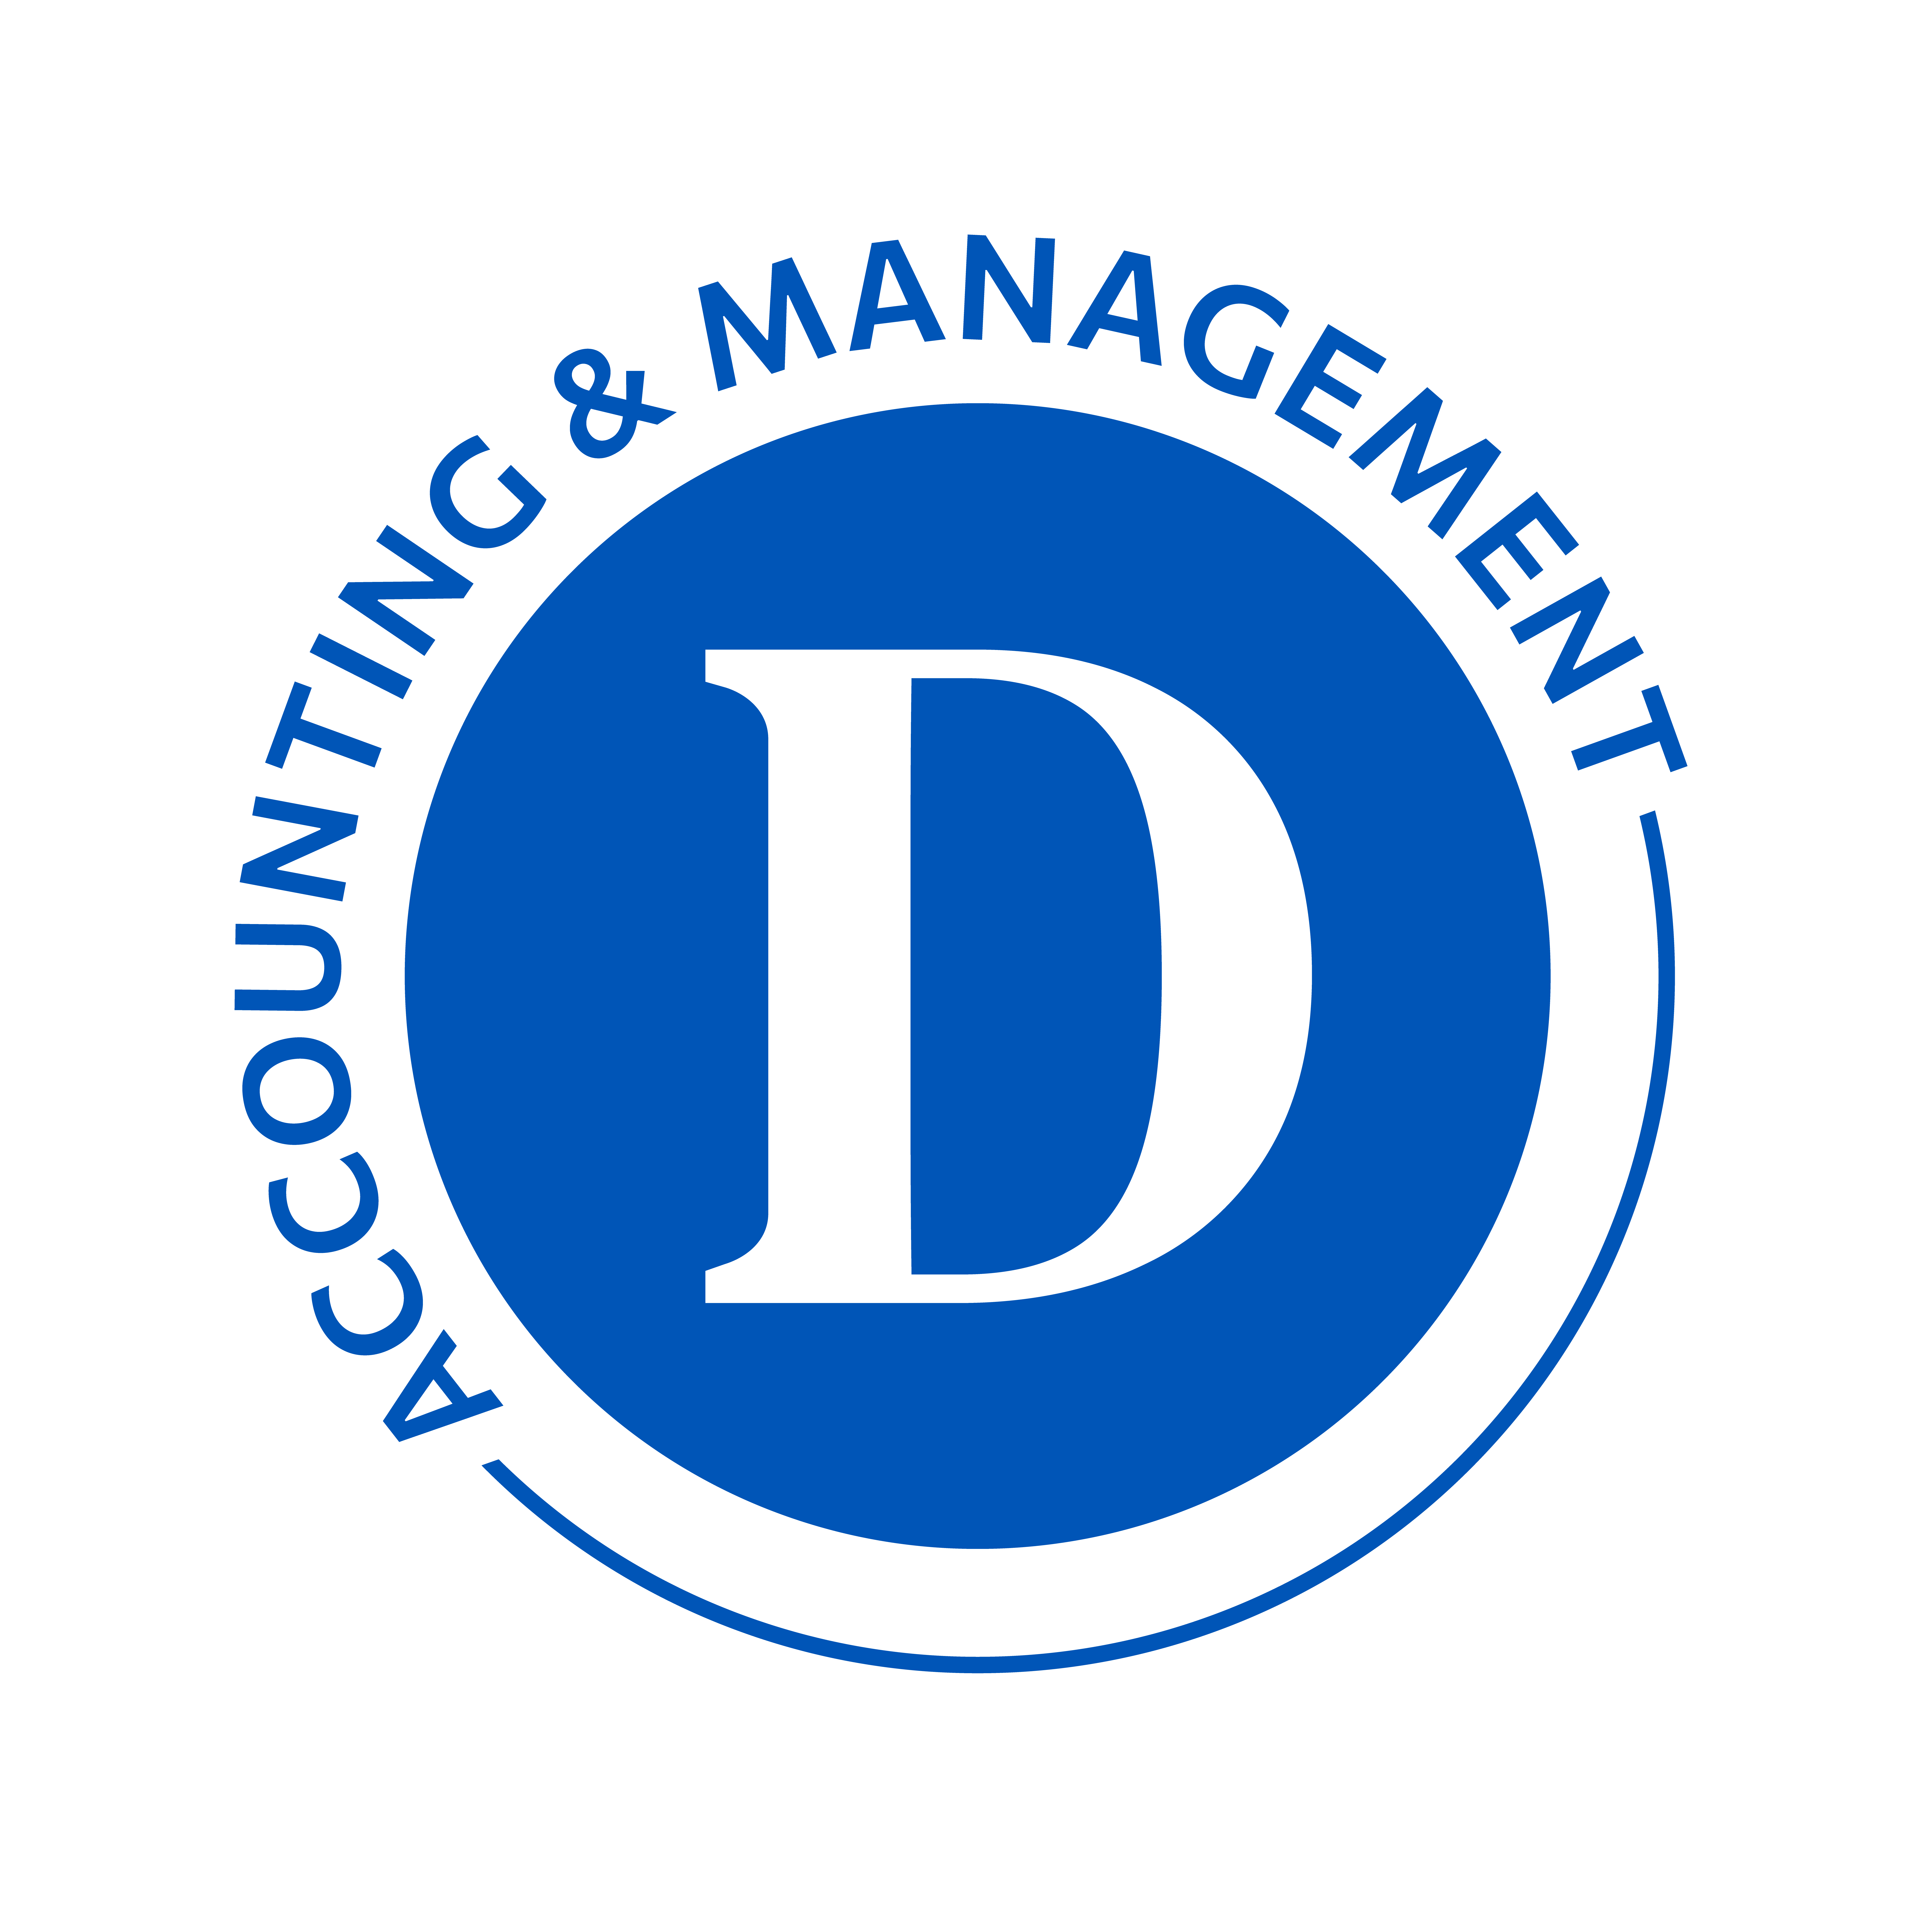 Accounting & Management logo 1